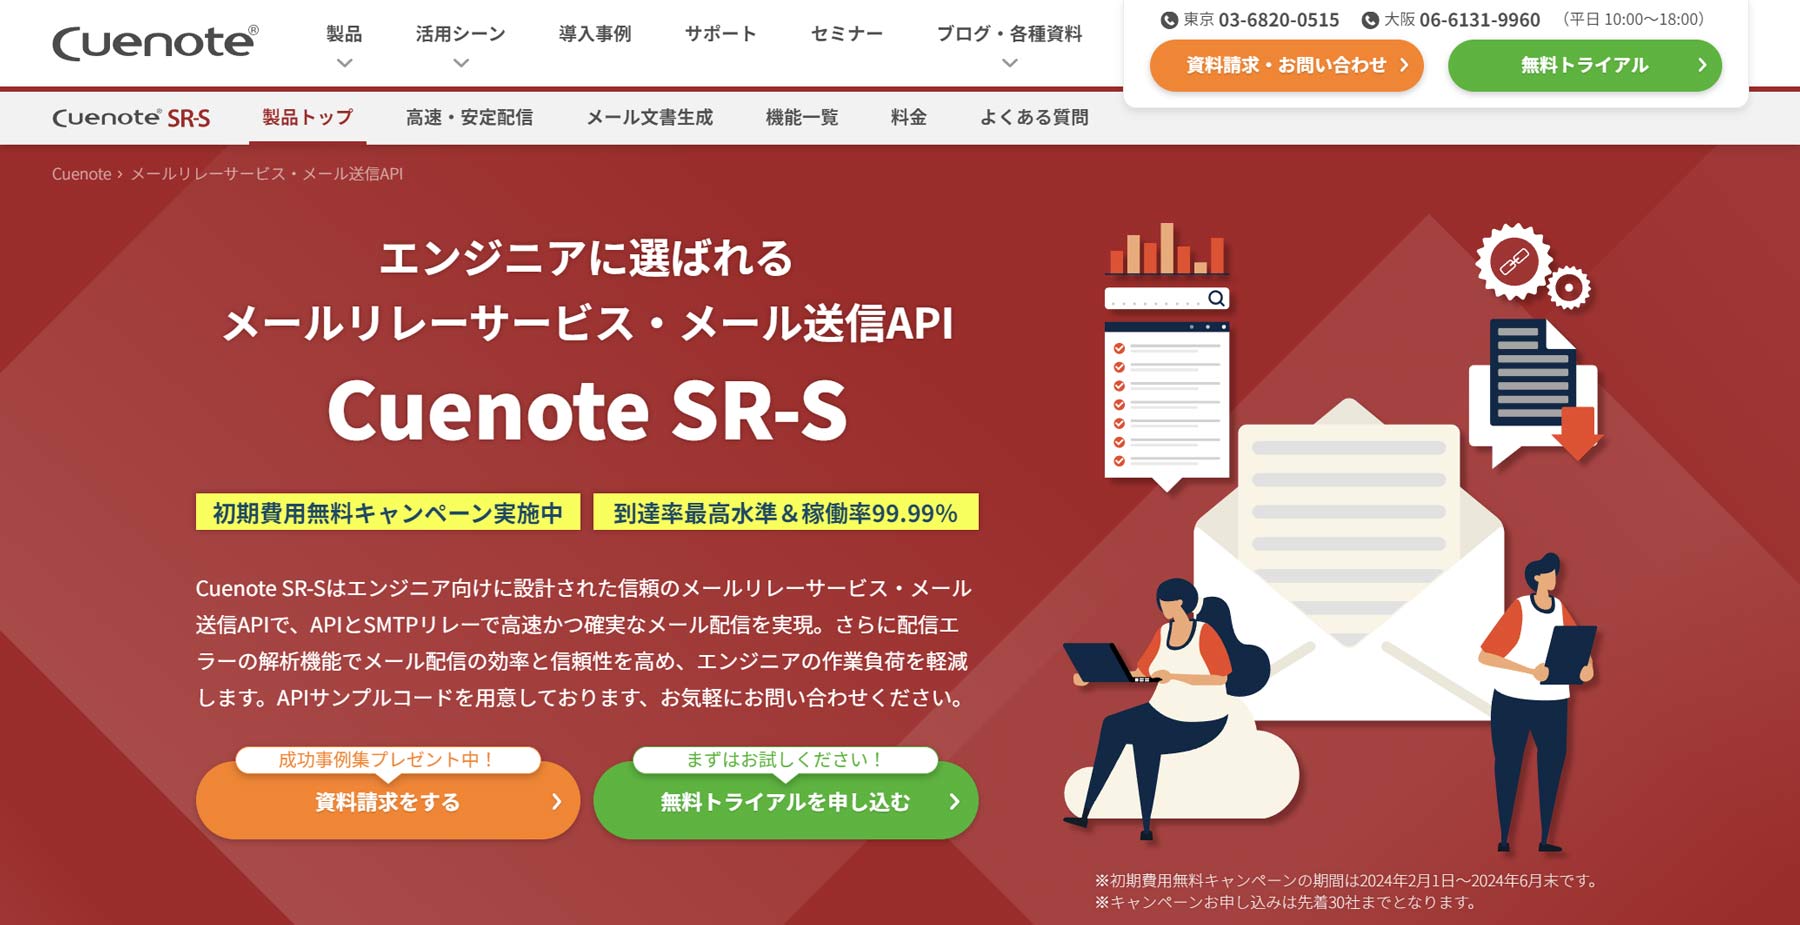 Cuenote SR-S公式Webサイト